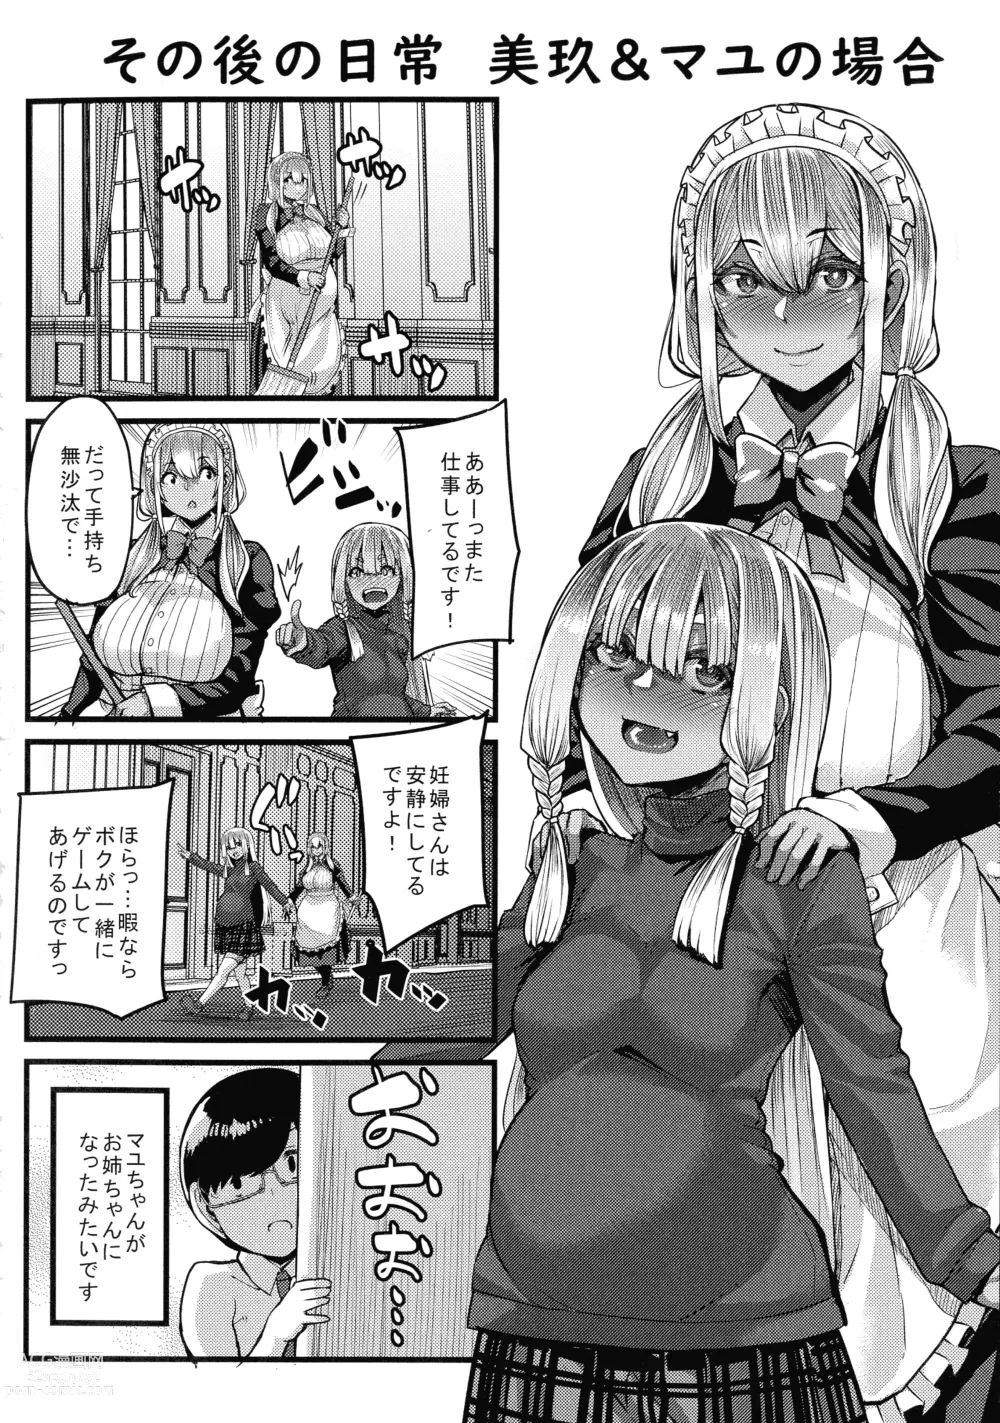 Page 204 of manga Kasshoku Hime to Himitsu no Keiyaku